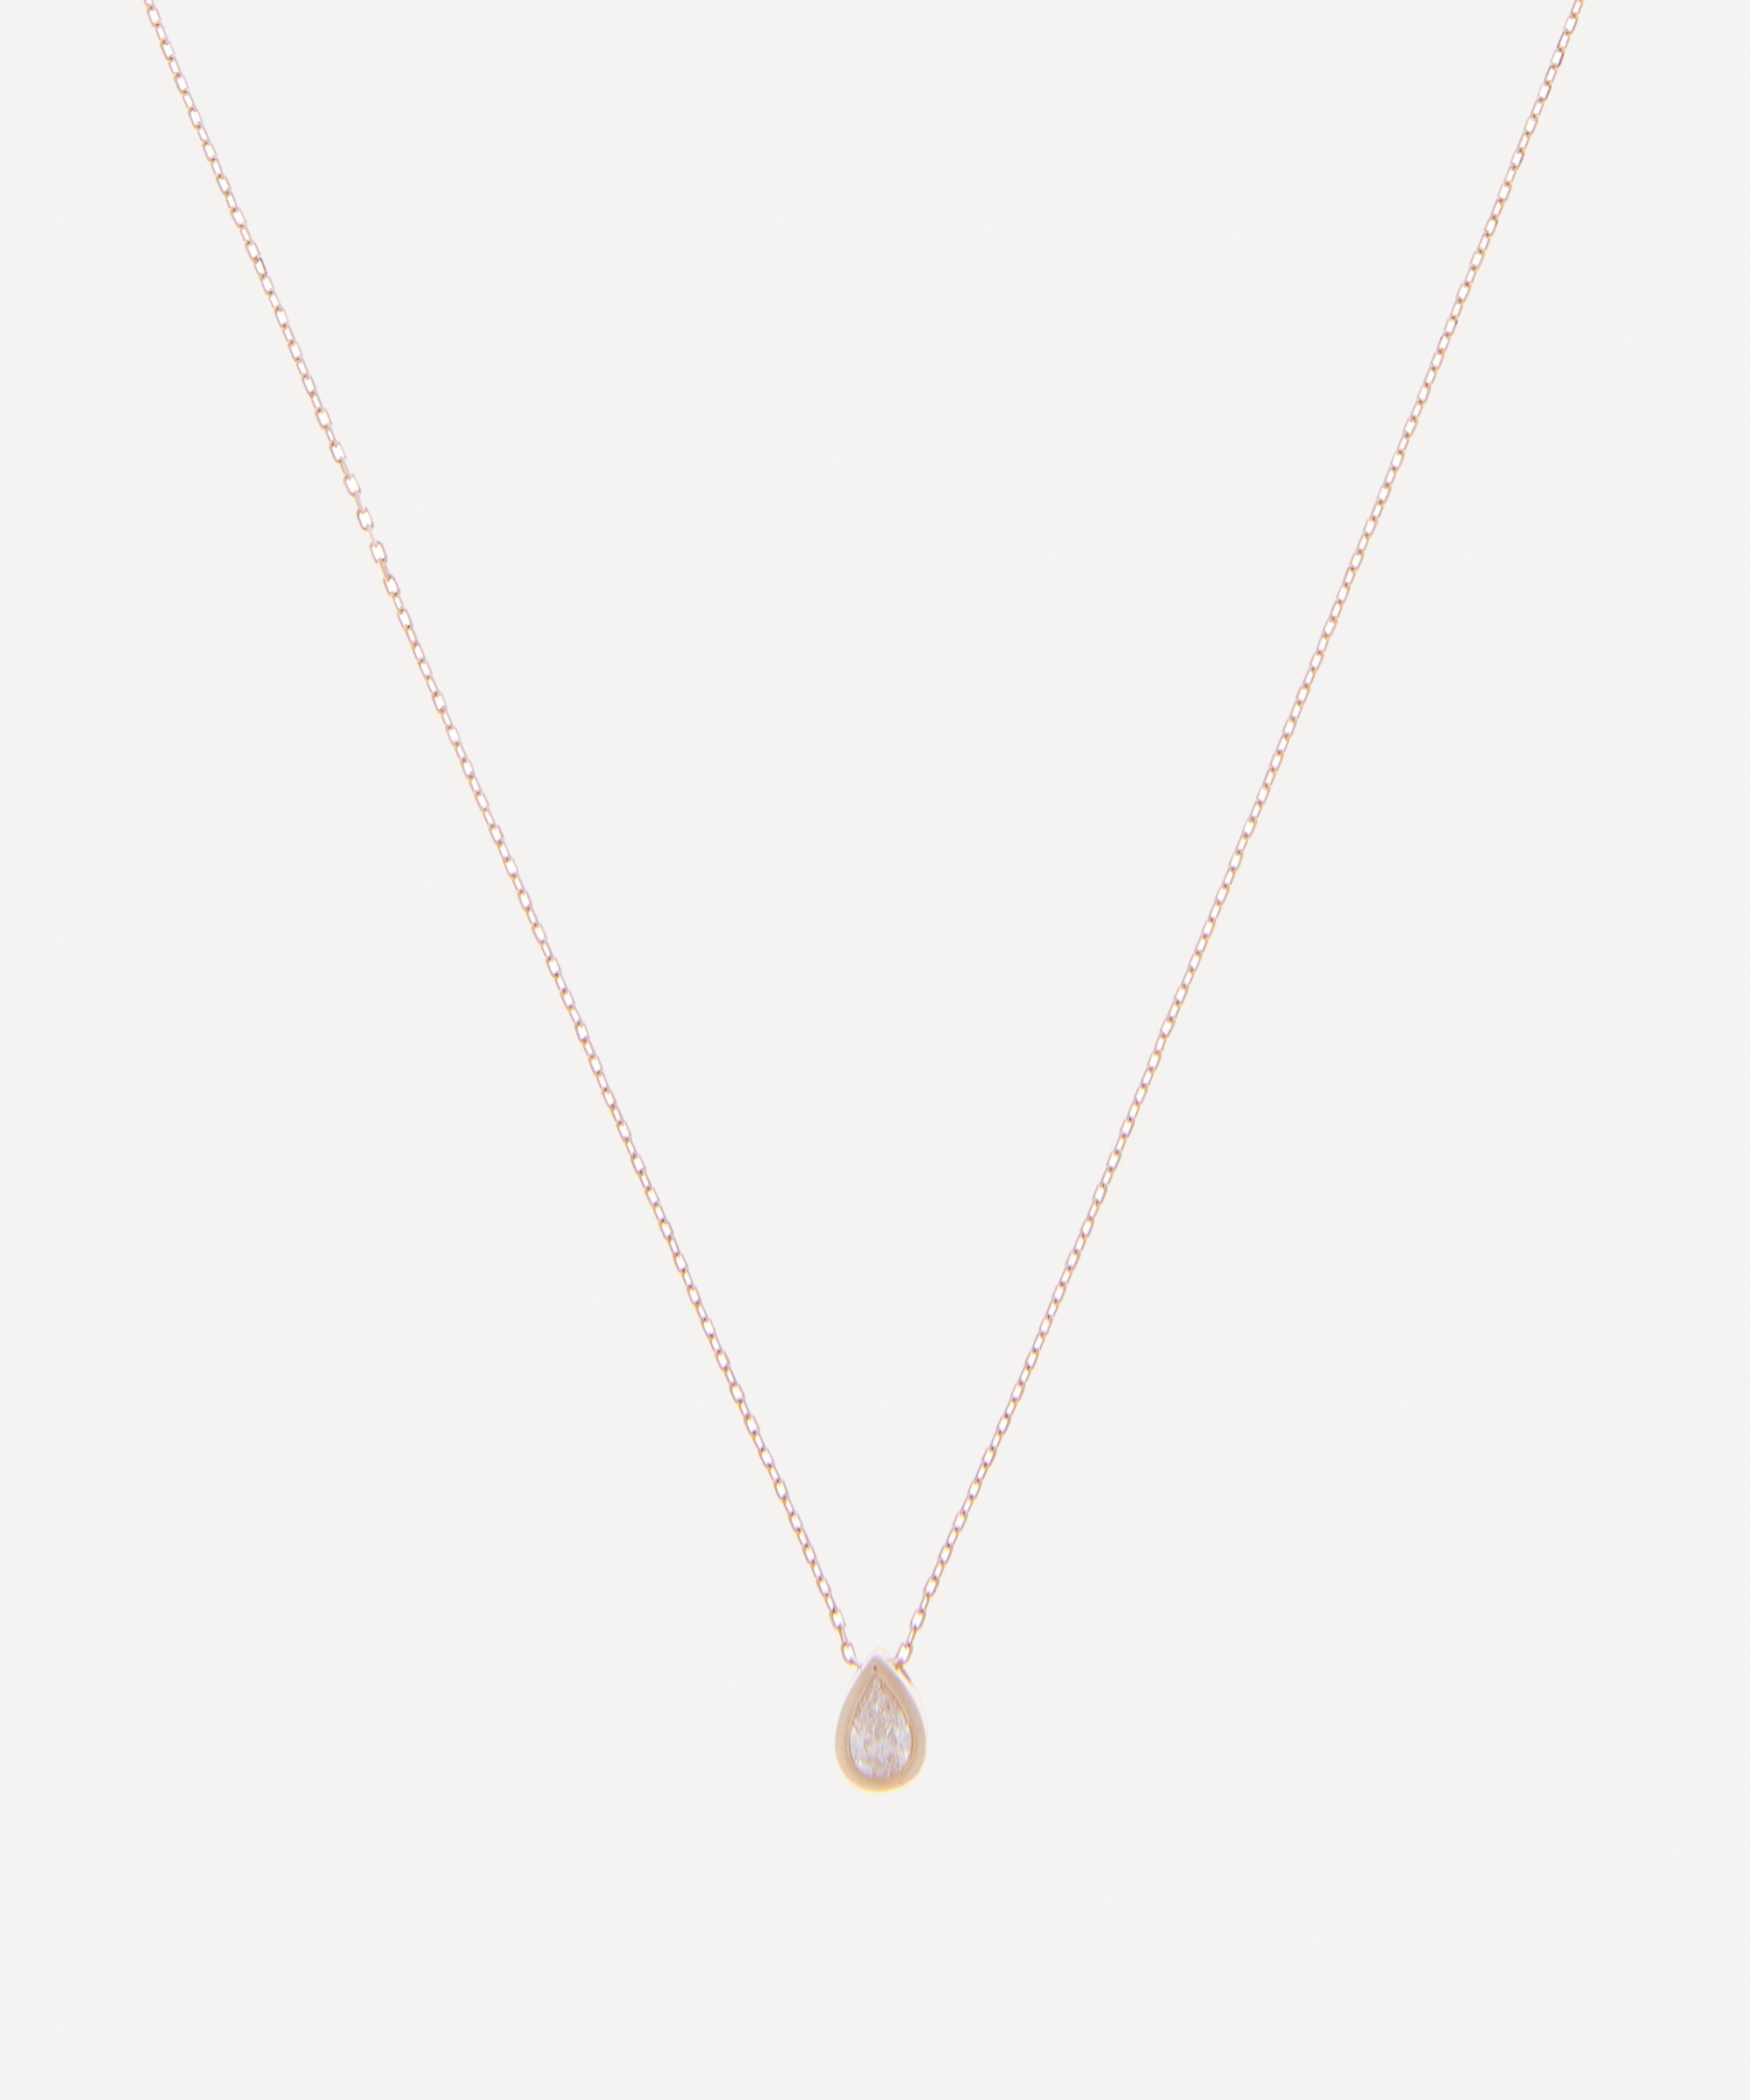 Mateo -  14ct Gold Single Pear Diamond Necklace